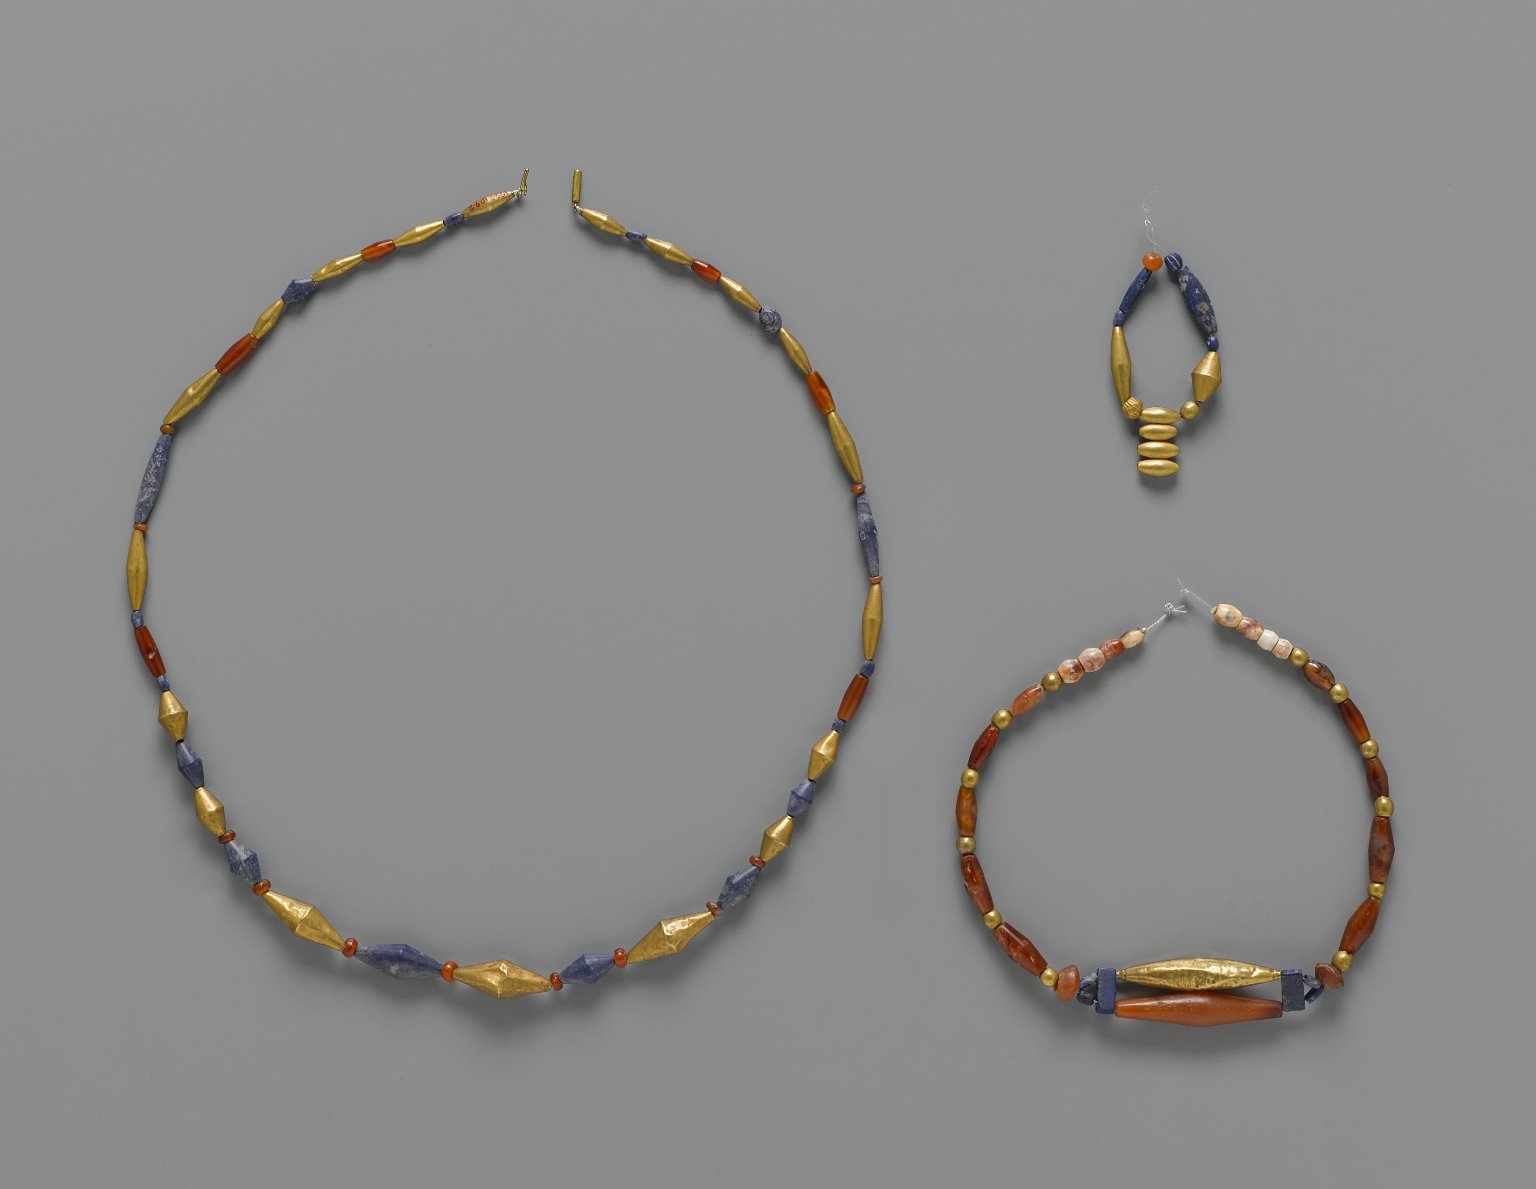 Beautiful Lapislazuli Necklace from Afghanistan - 10 Strings